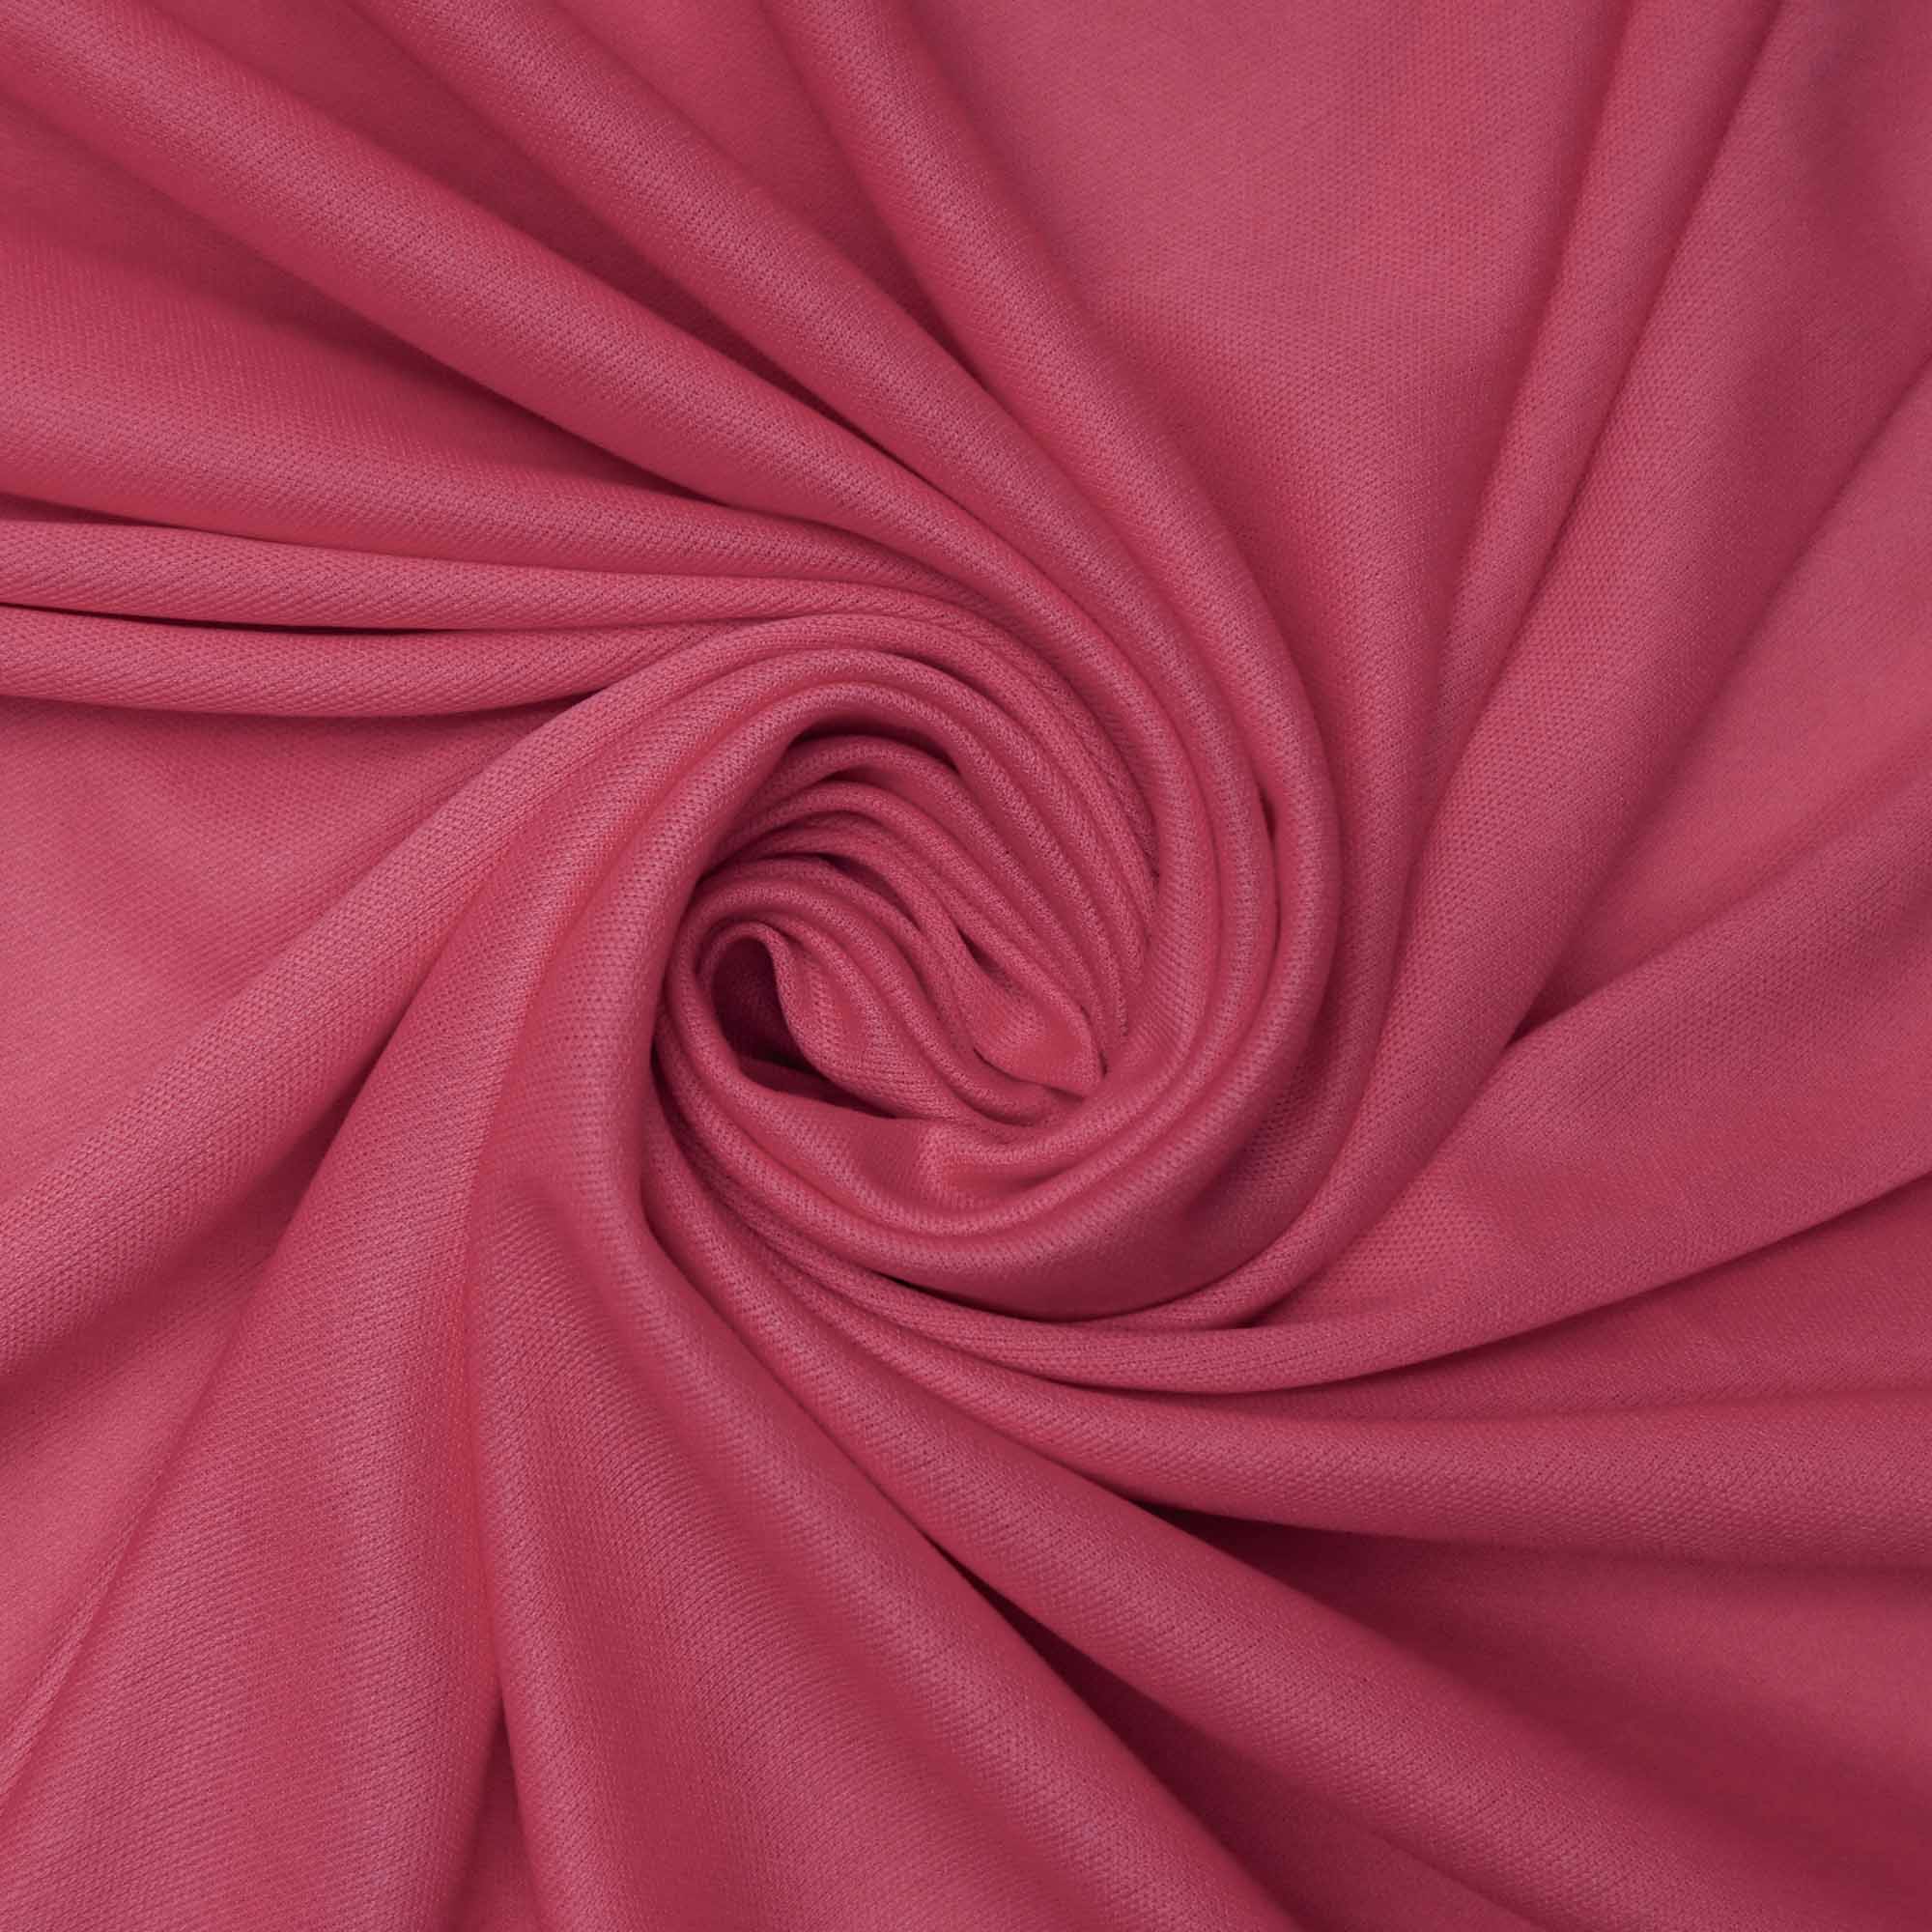 Tecido malha helanca rosa coral